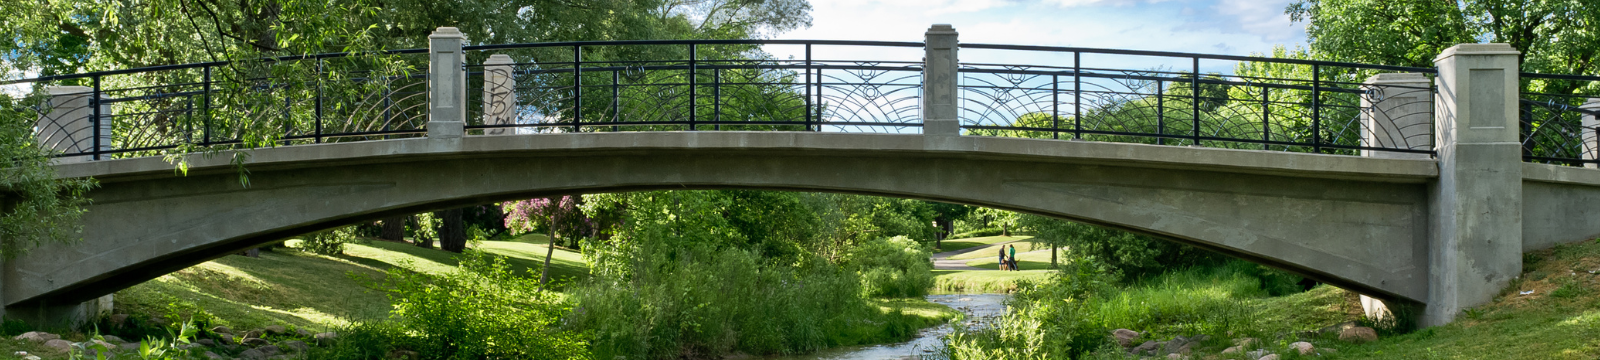 Bridge in Oshawa Valley Botanical Gardens